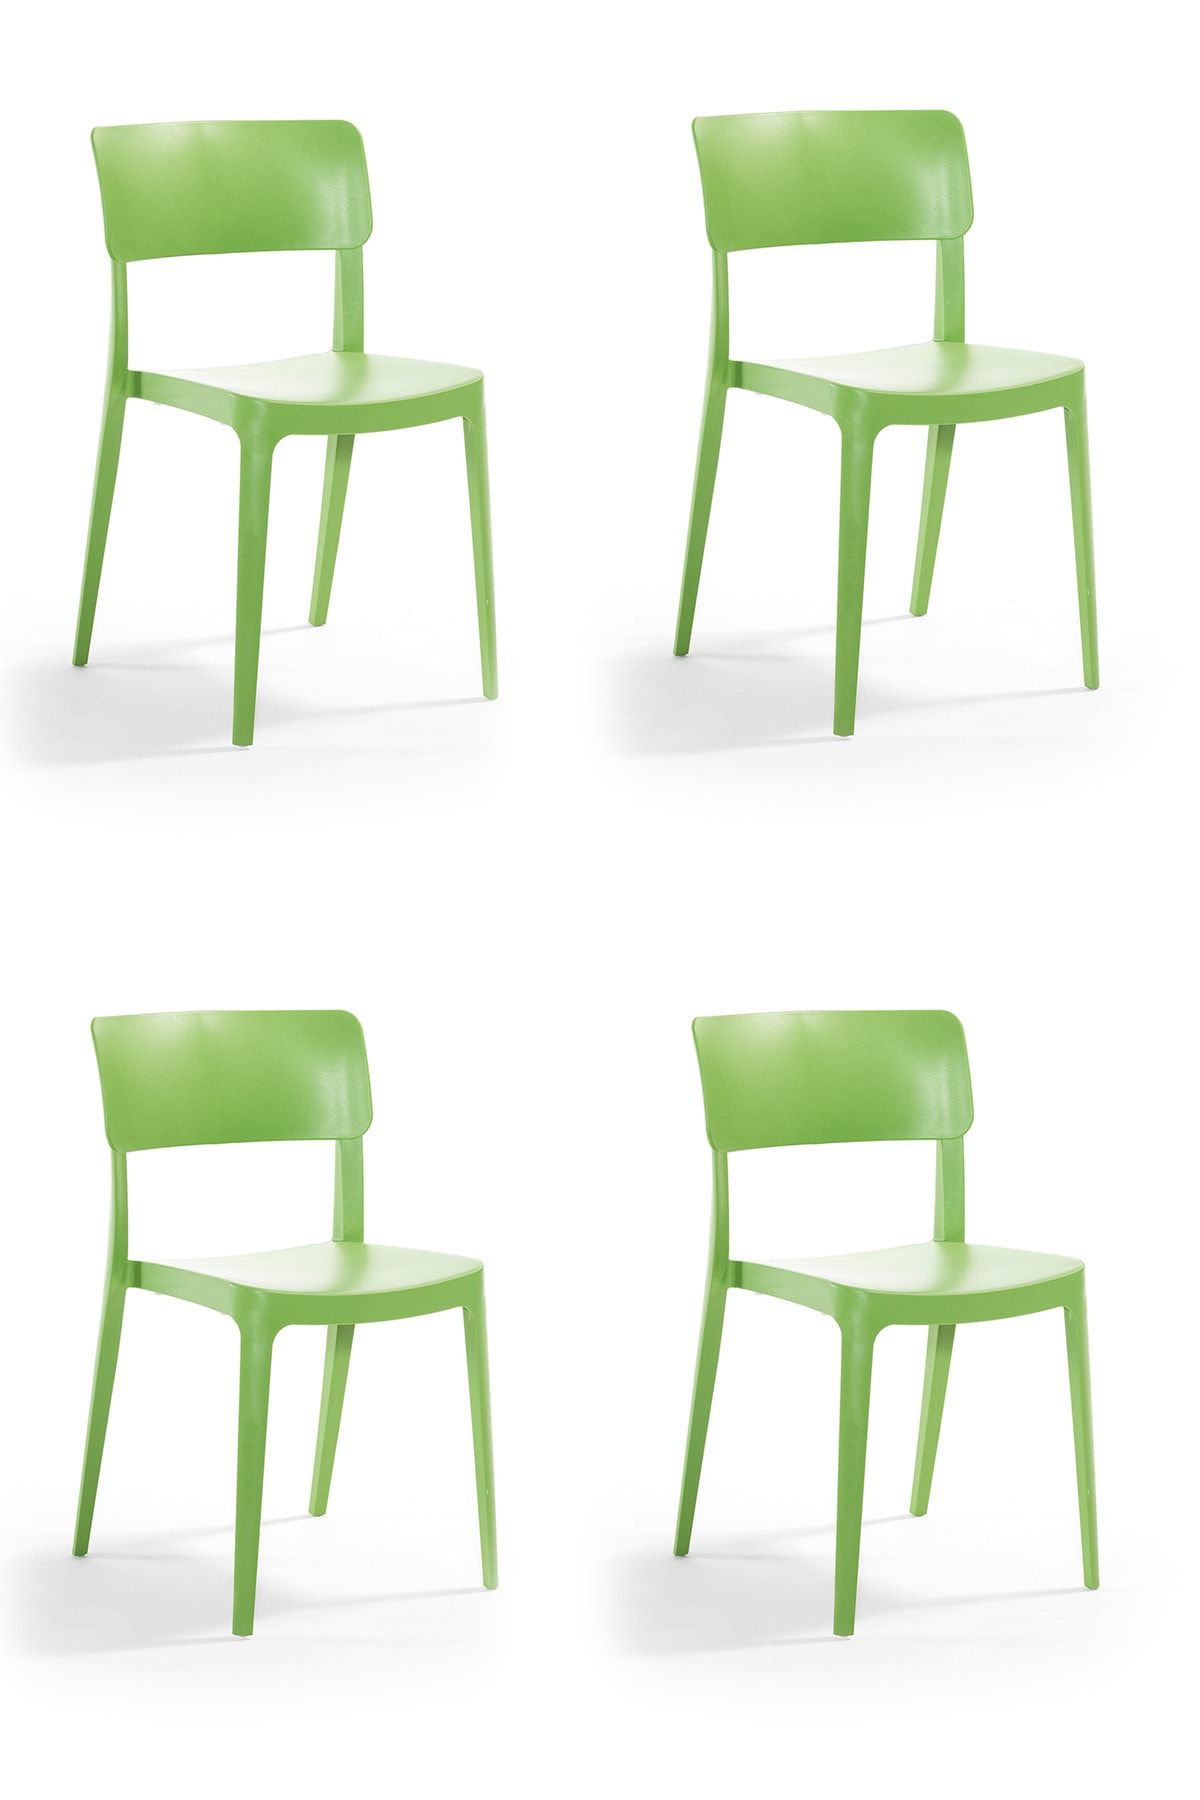 Alezy Pano Renkli Sandalye 4'lü Set Yeşil